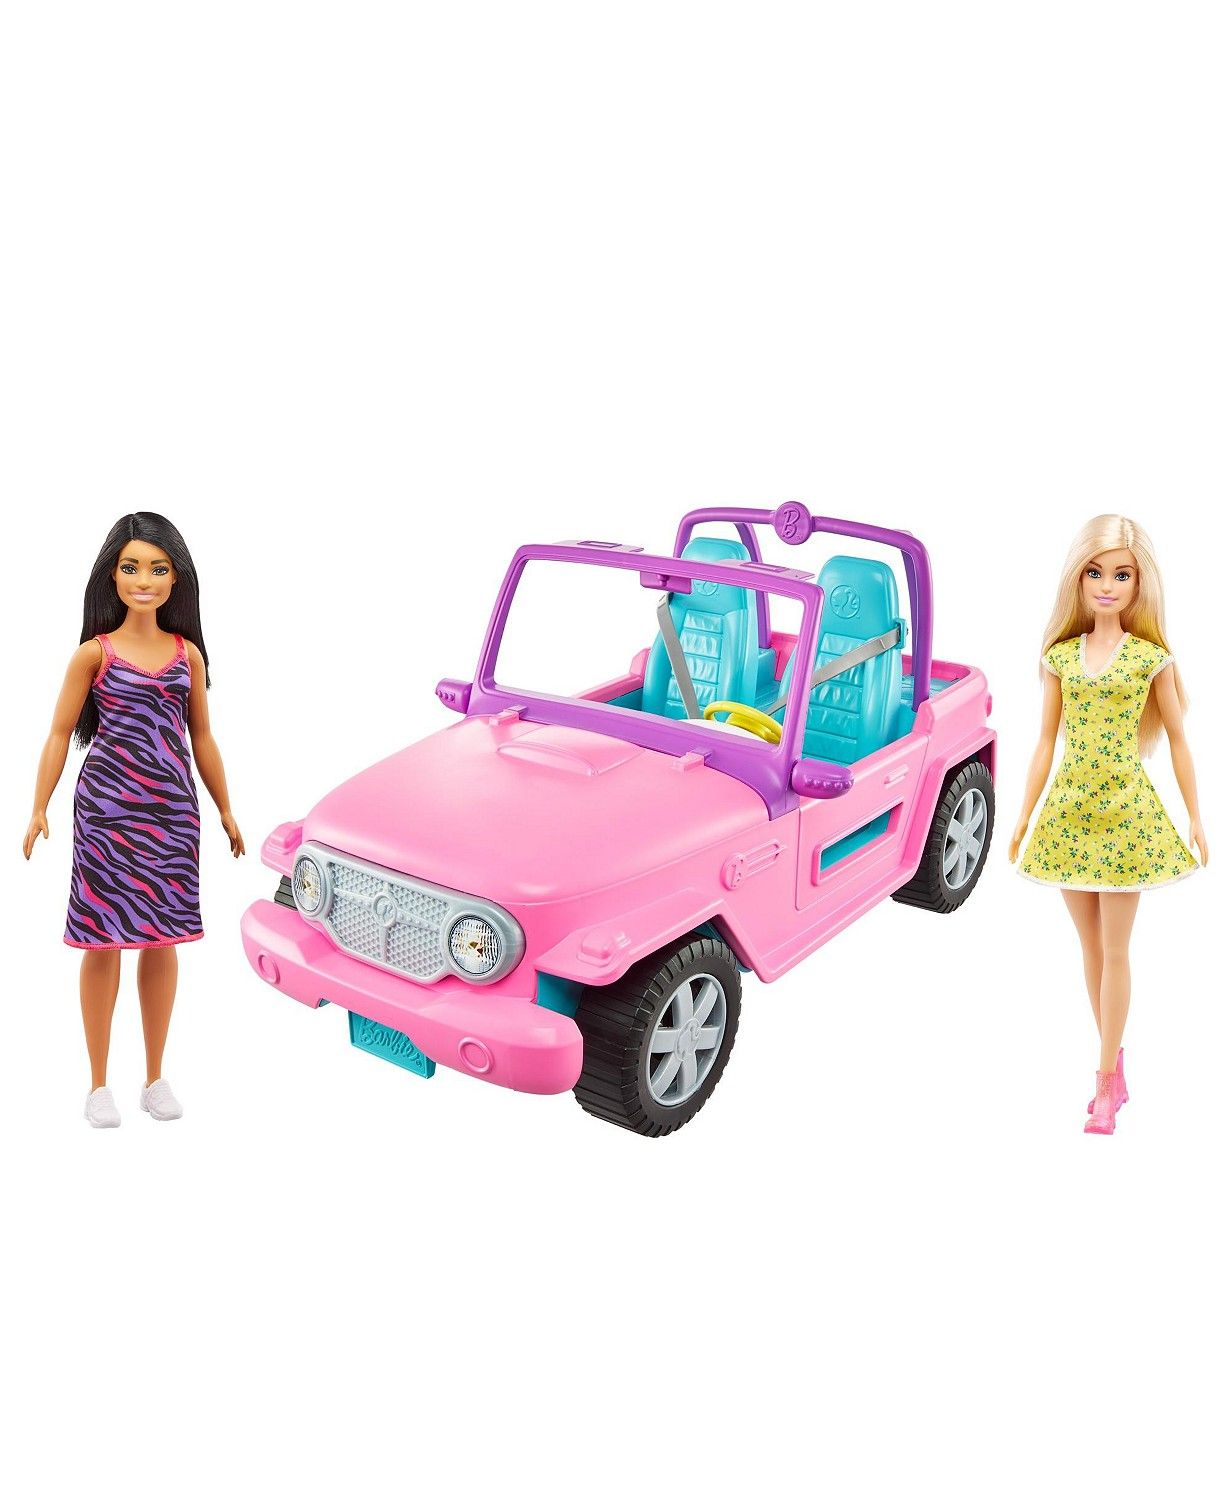 Barbie And Friend Vehicle & Reviews - Home - Macy's | Macys (US)